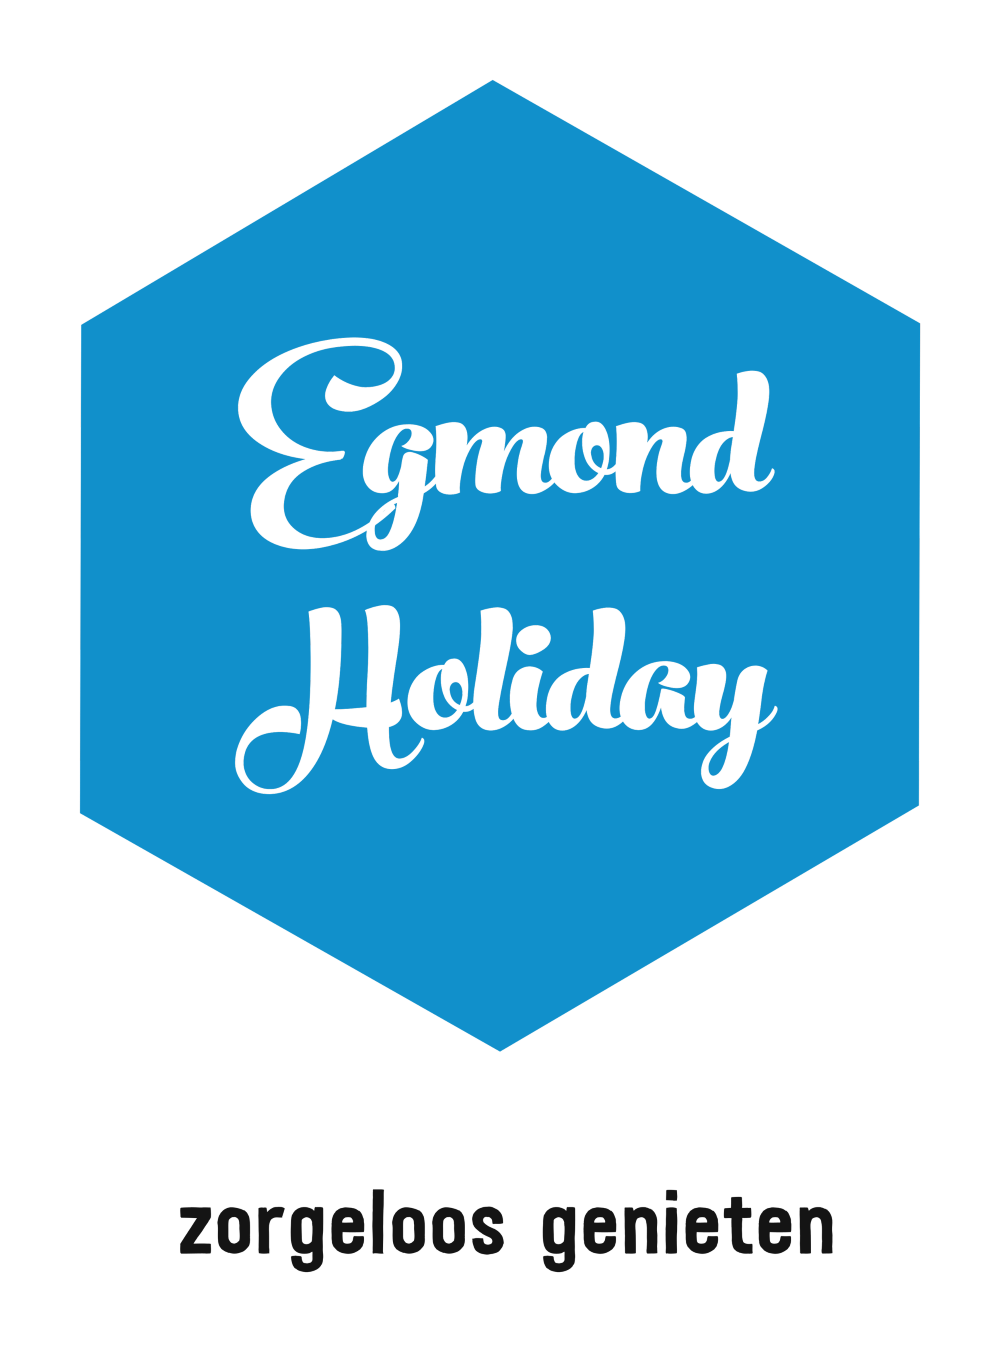 Egmond Holiday